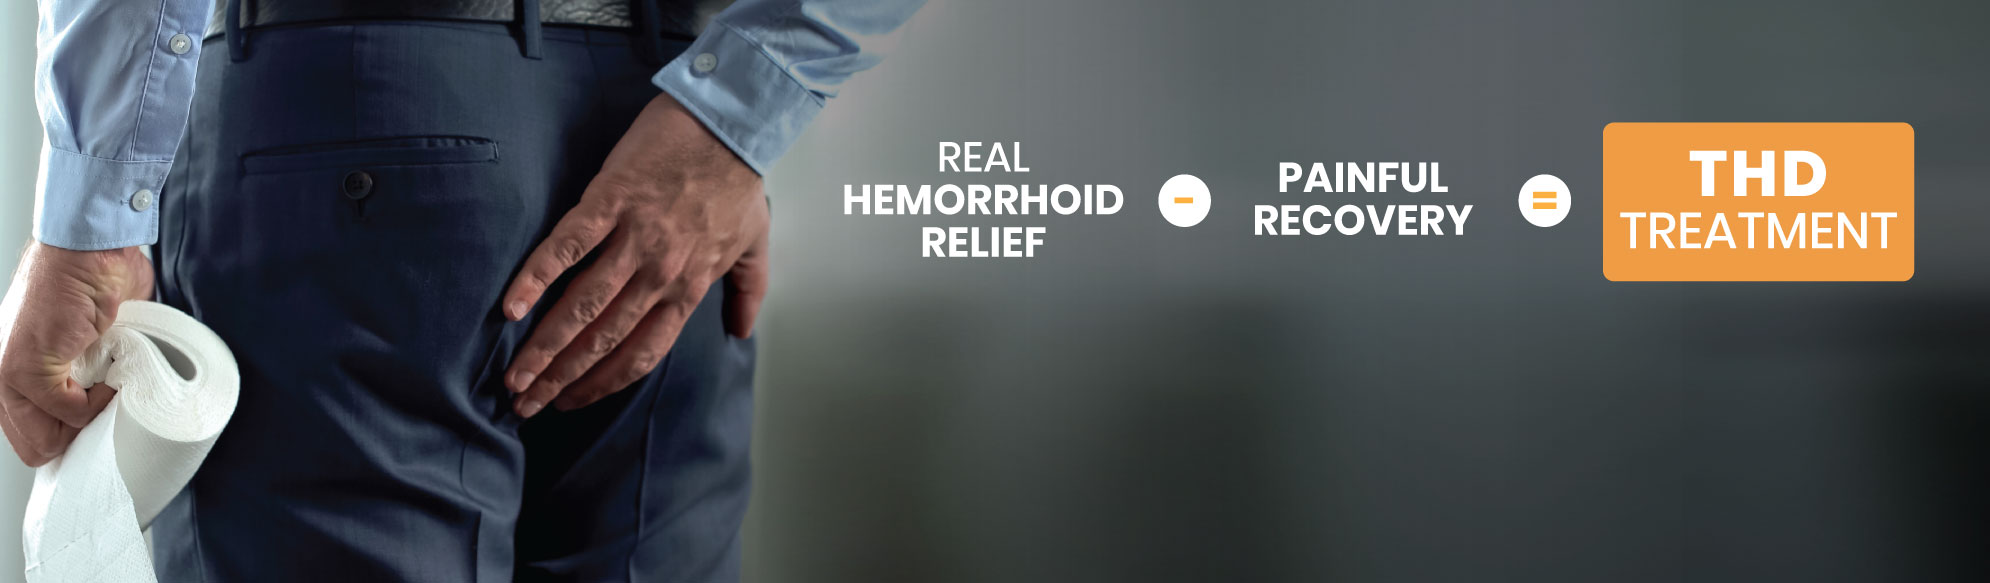 THD-Treatment-for-Hemorrhoid-Relief Orange County Hemorrhoid Clinic